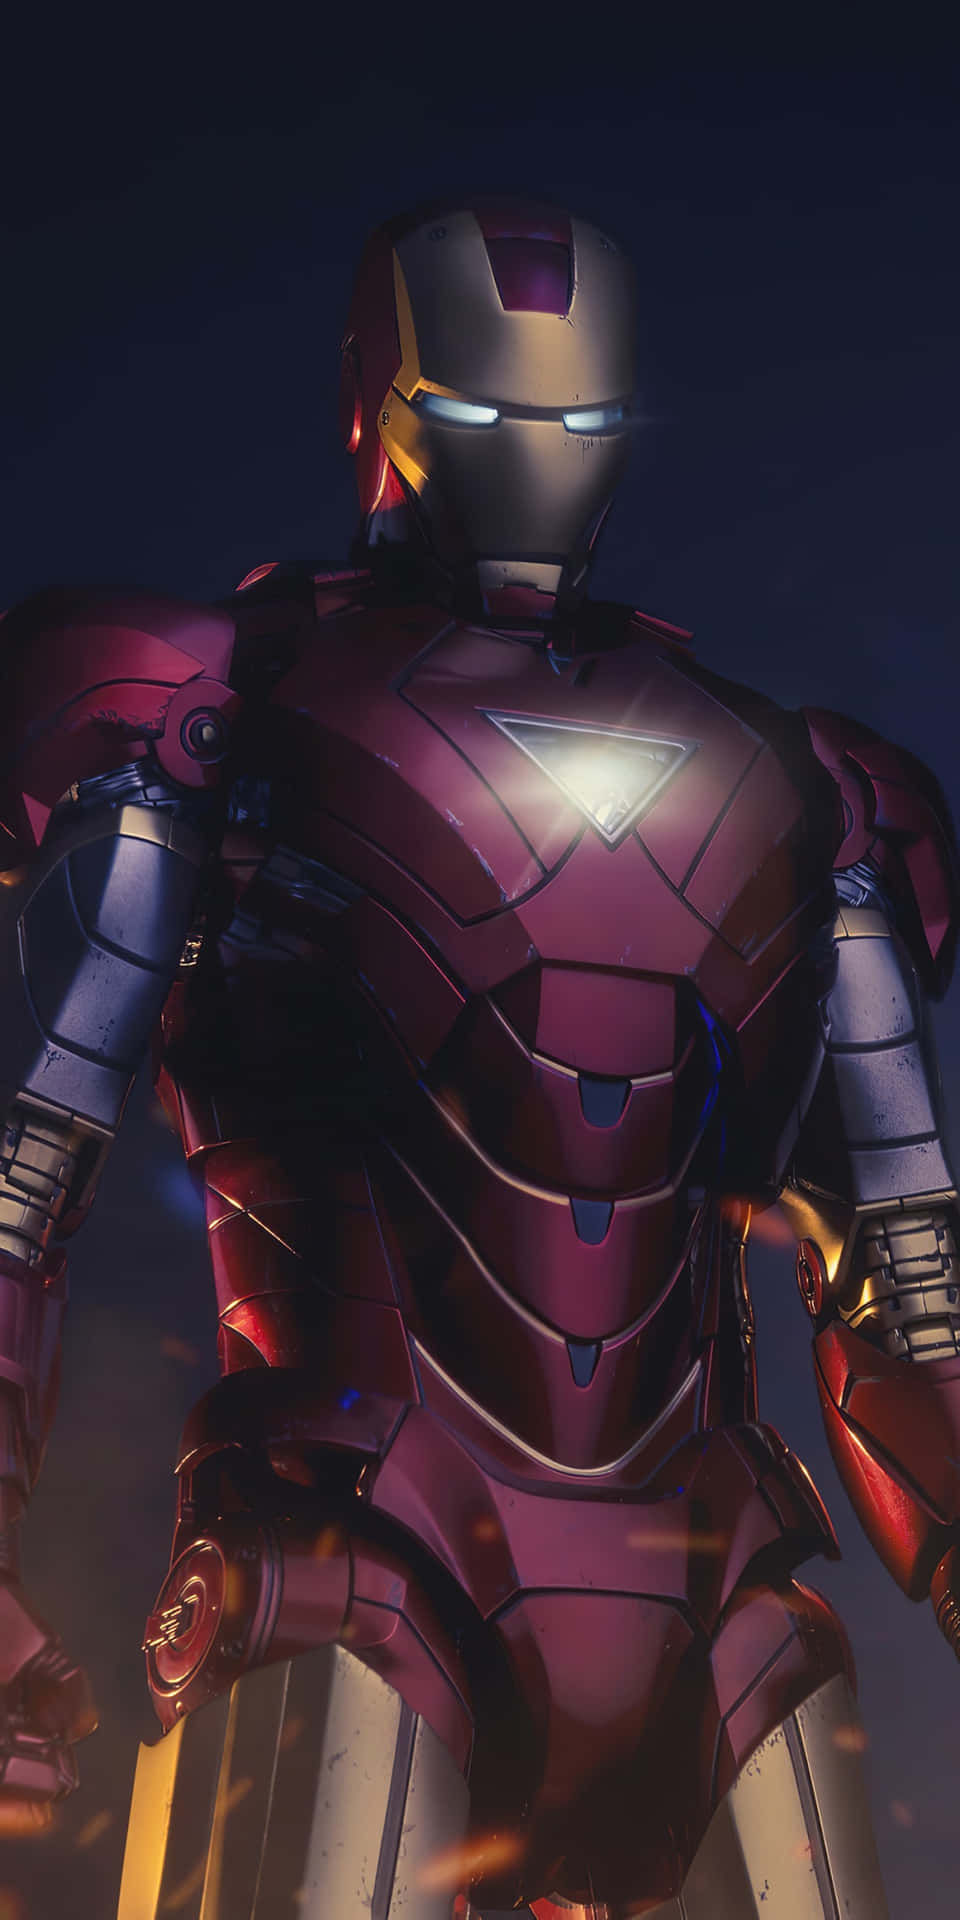 Pixel3 Bakgrund Med Iron Man Repad Rustningsdesign.